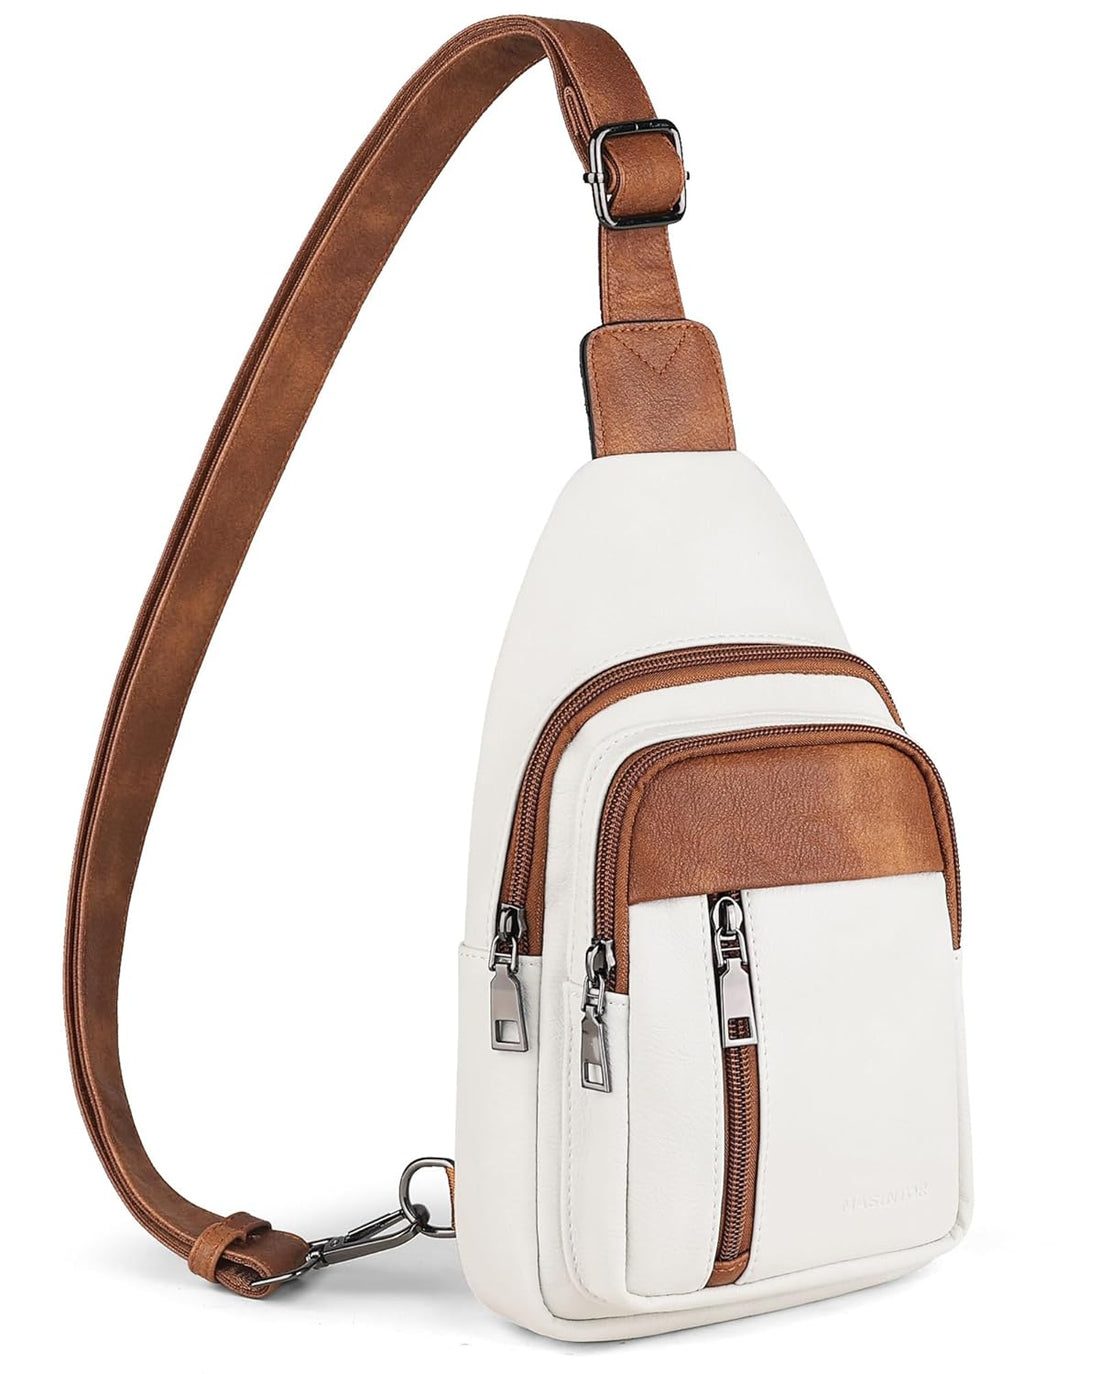 MASINTOR Sling Bag for Women - Crossbody Bags Fanny Pack with Vegan Leather - Adjustable Sling Backack for Travel